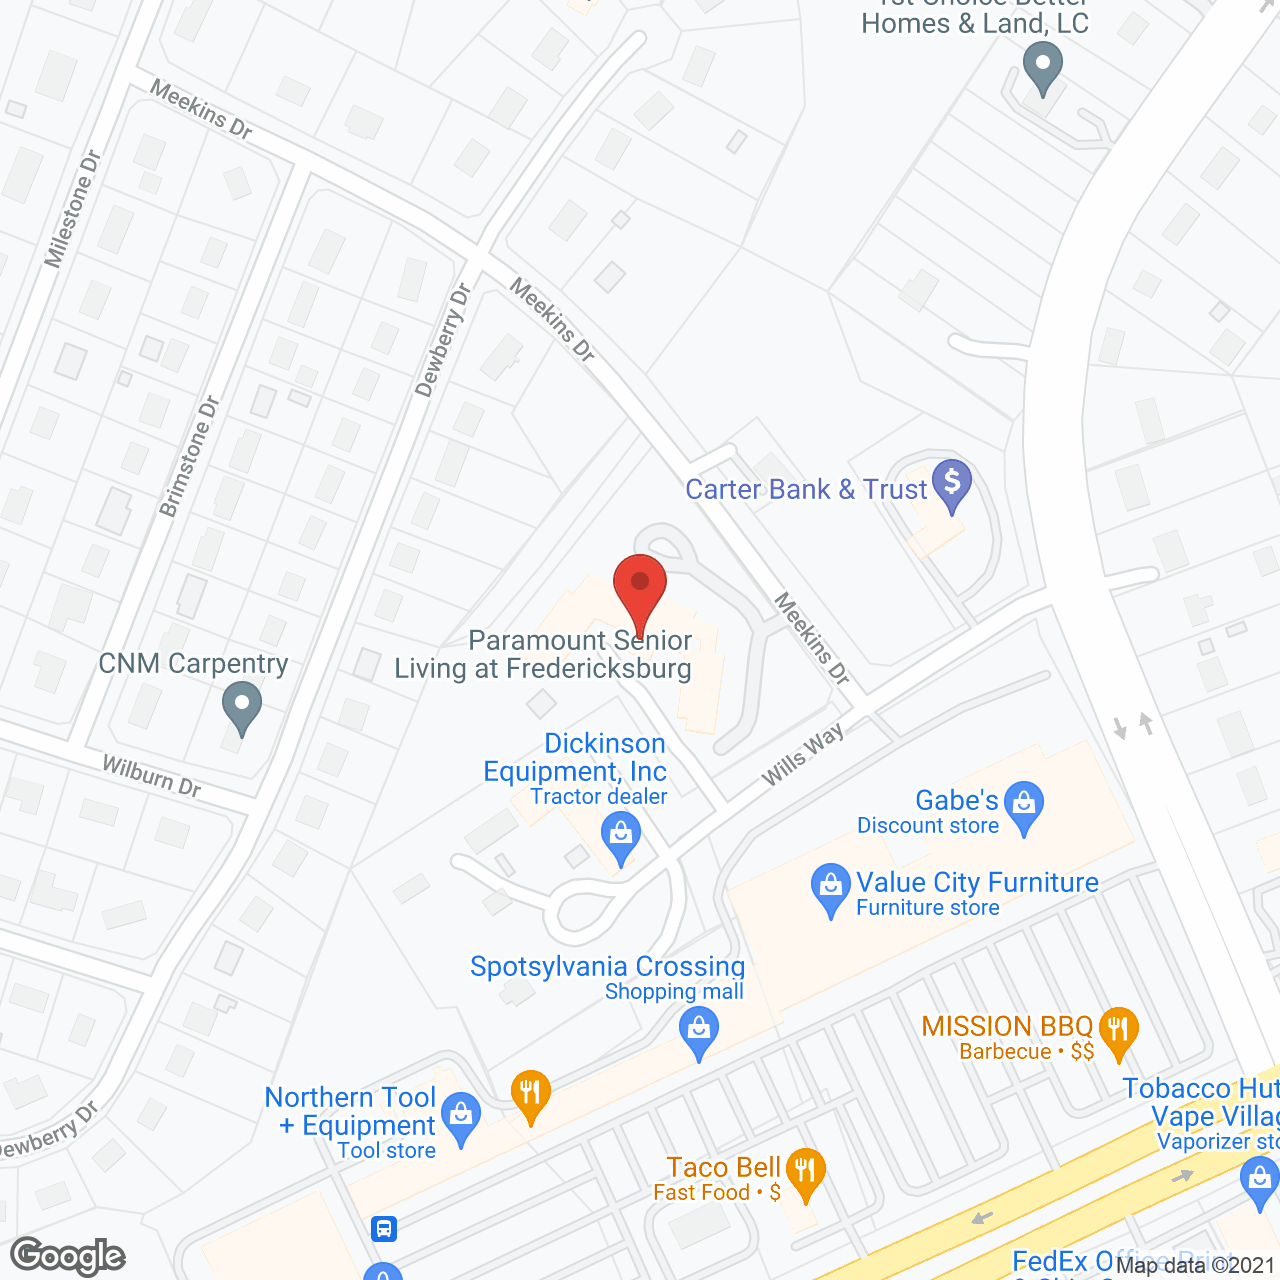 Paramount Senior Living at Fredericksburg in google map